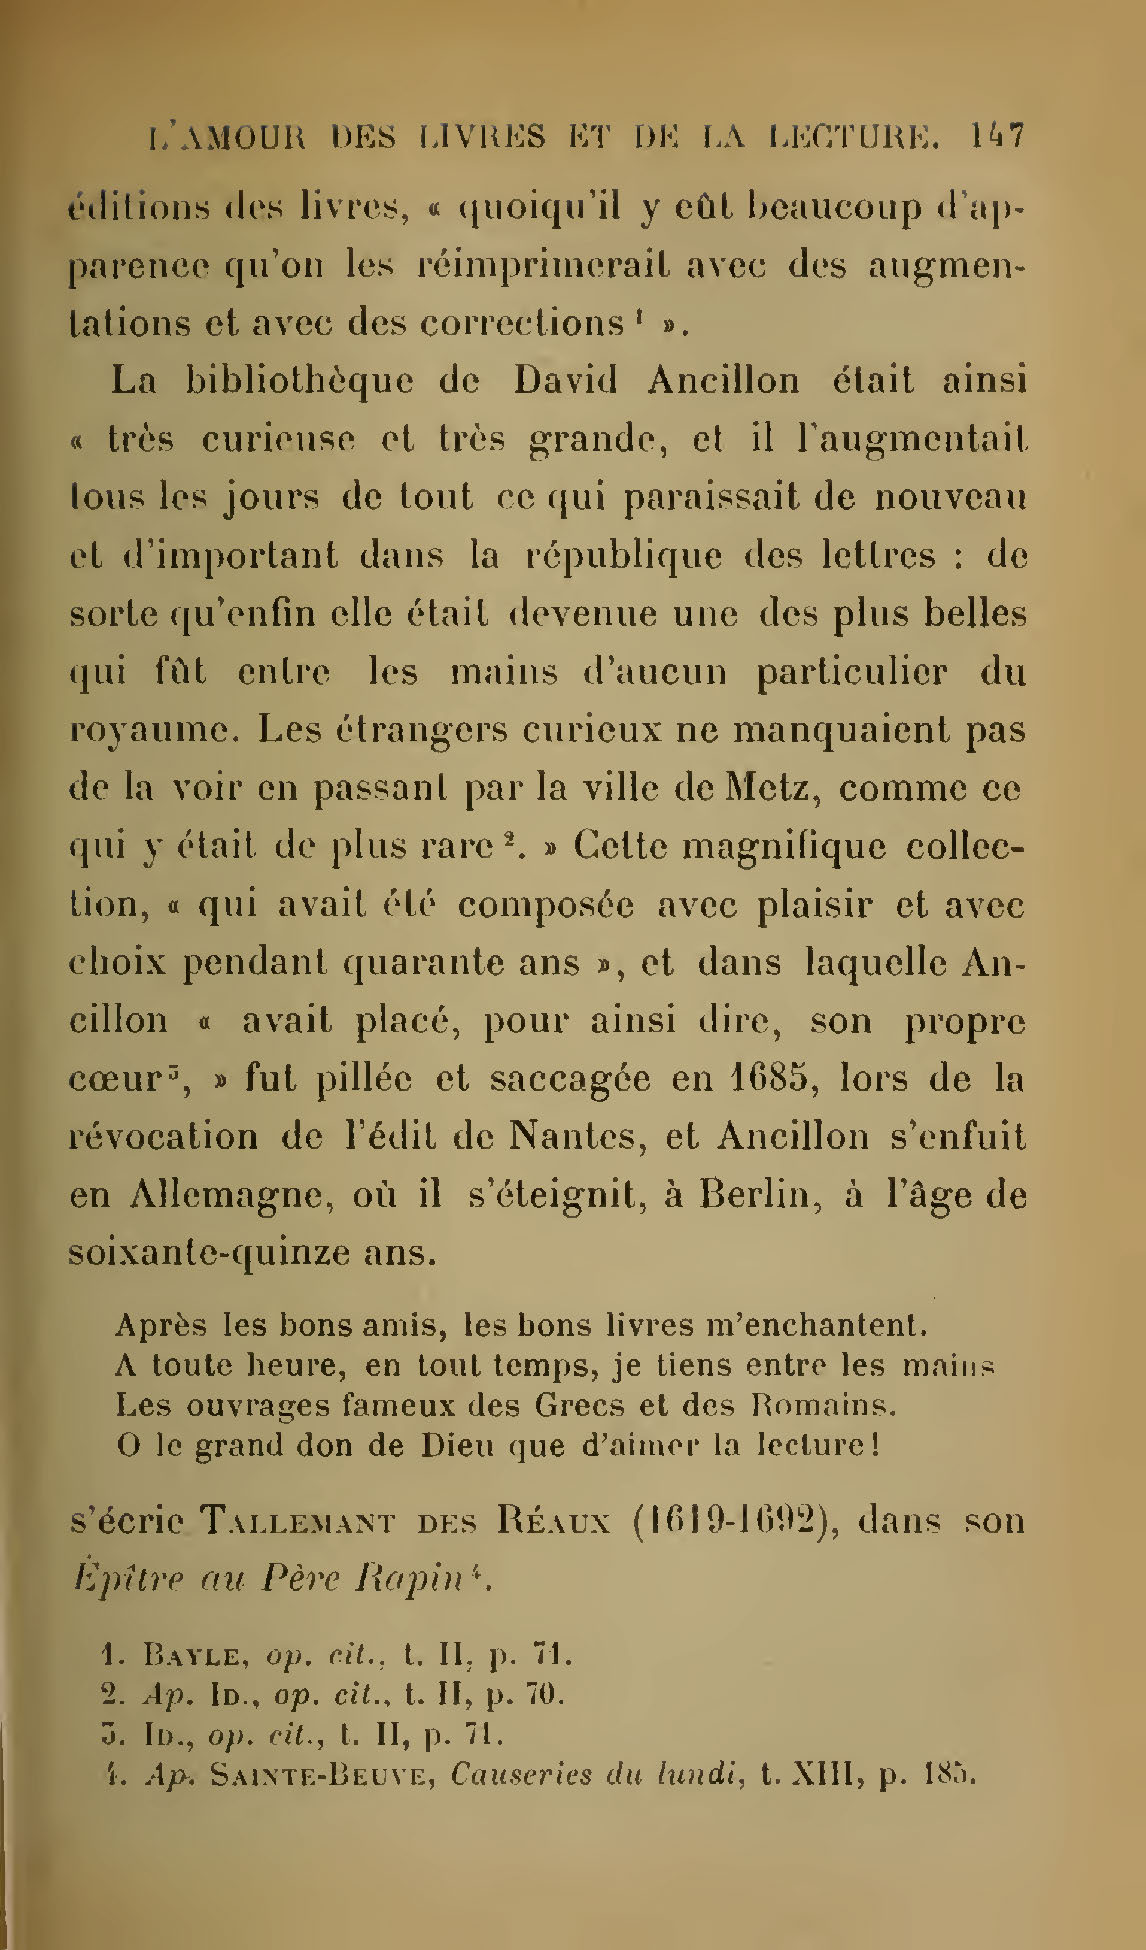 Albert Cim, Le Livre, t. I, p. 147.